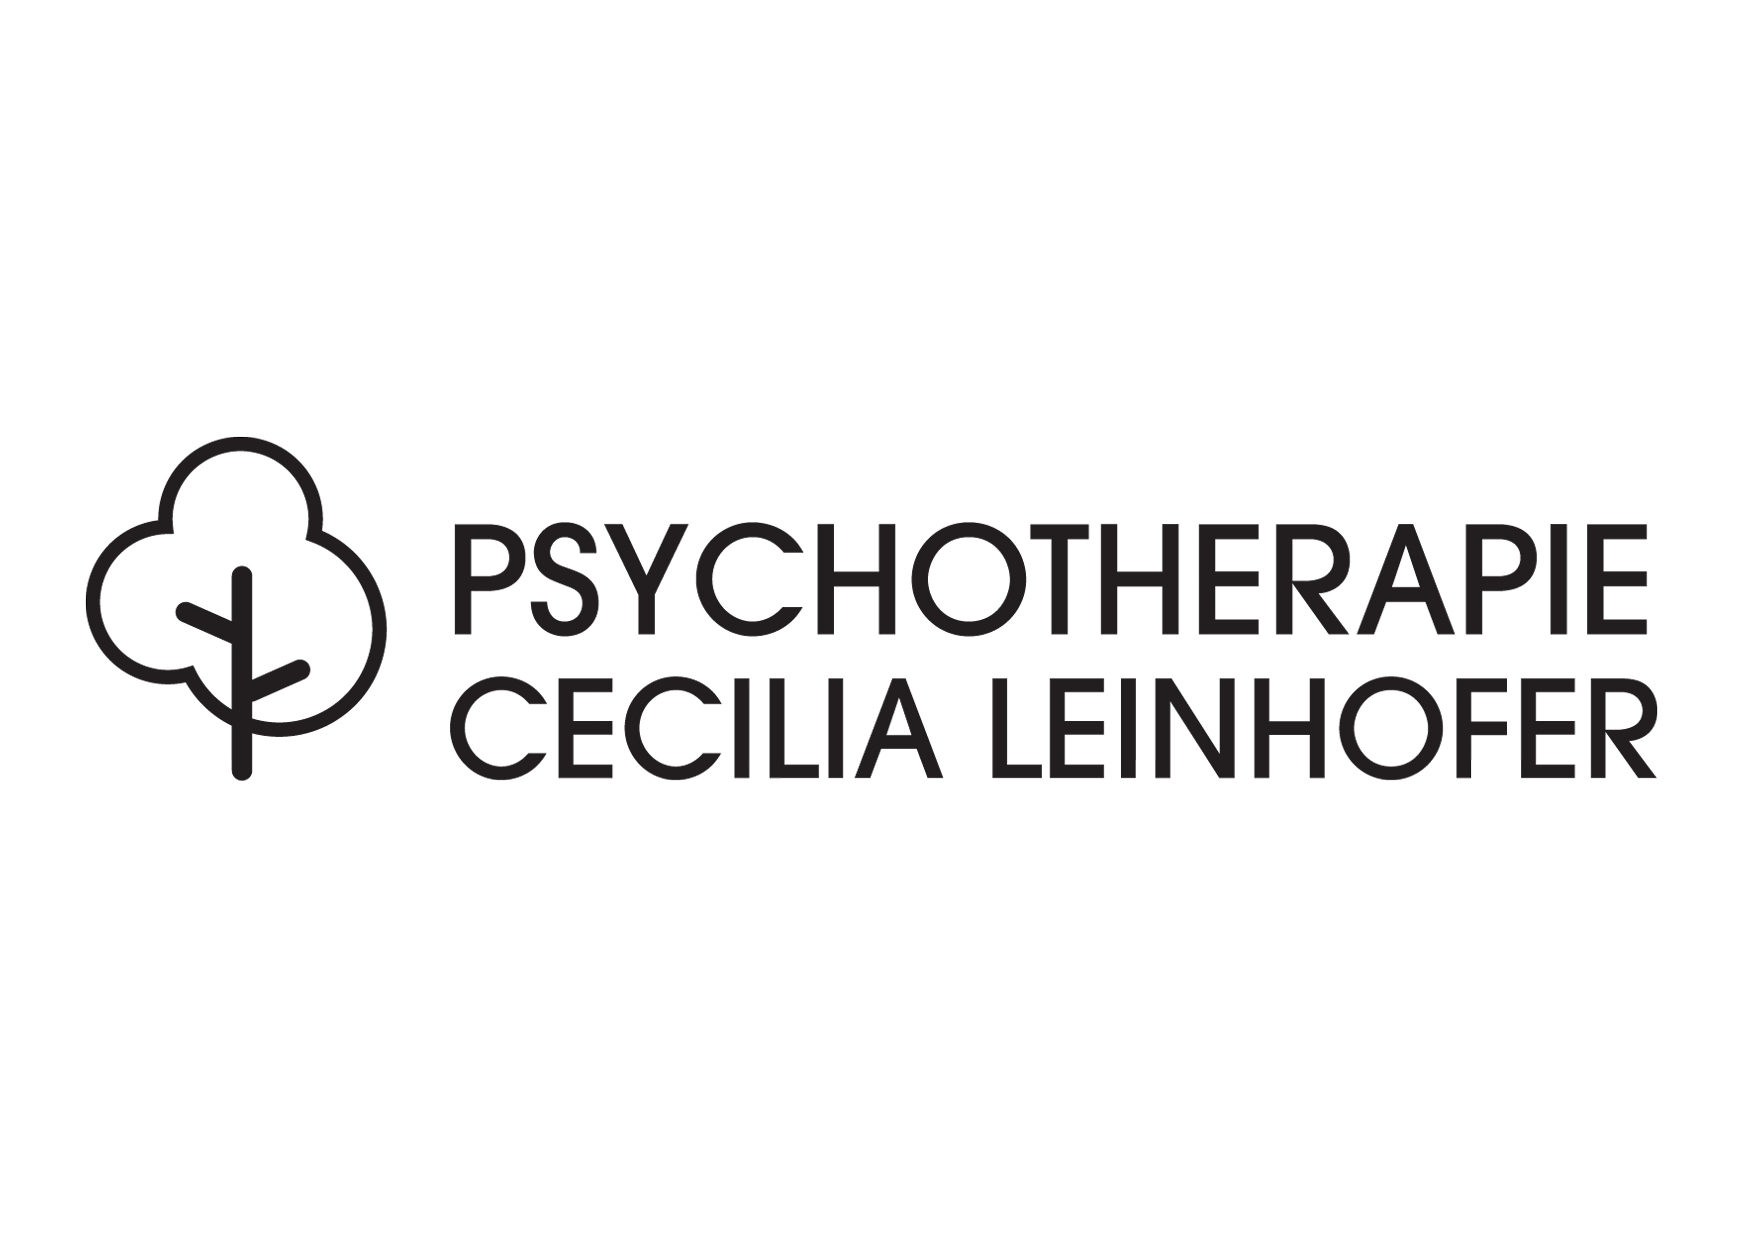 Cecilia-Leinhofer-Psychotherapie_Modern_BLACK A4